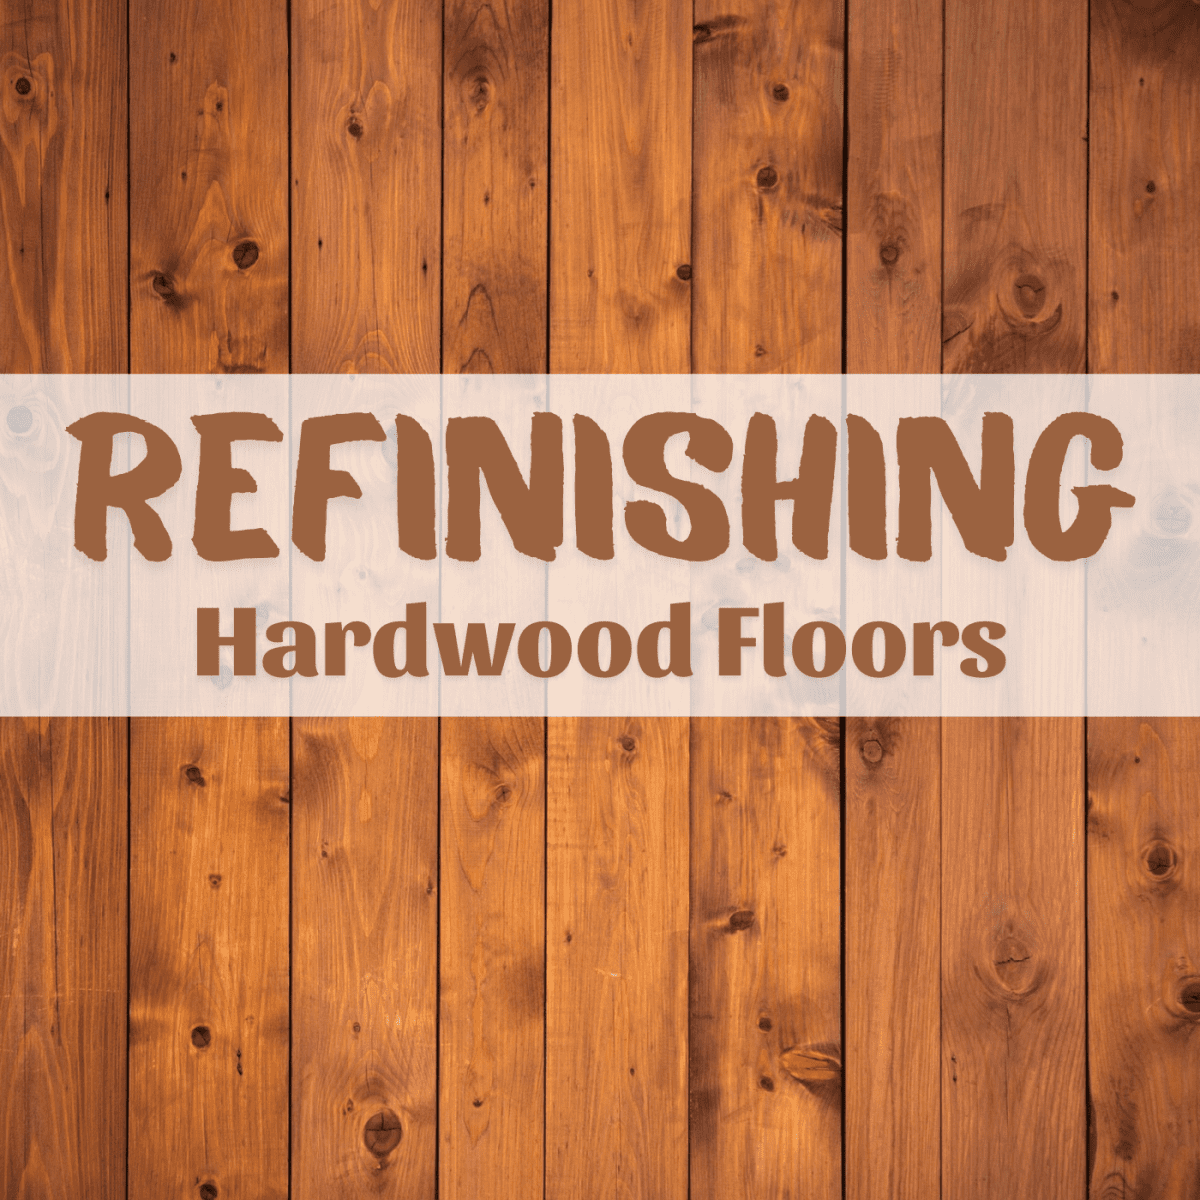 How To Refinish A Hardwood Floor, How Do I Prep My Hardwood Floors For Refinishing